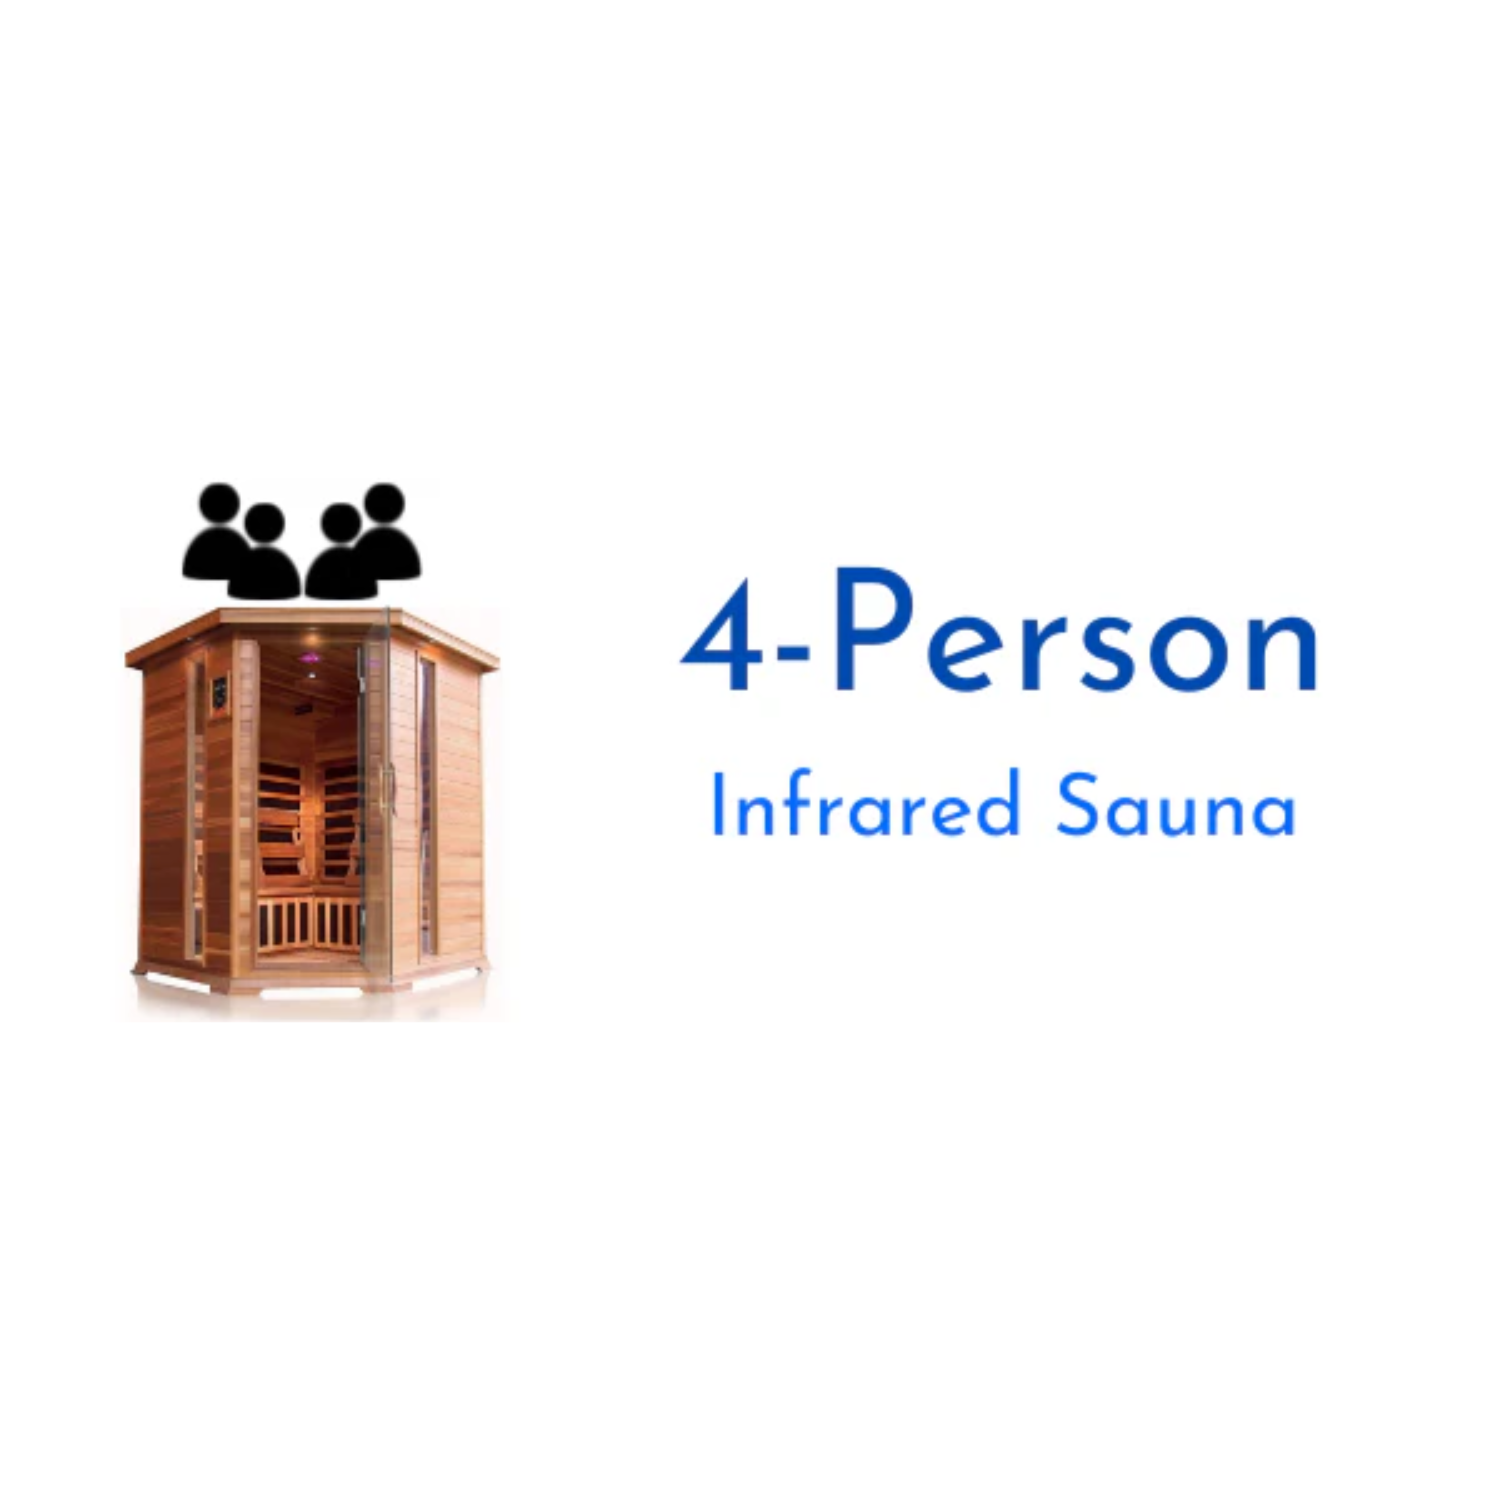 4-Person Infrared Sauna